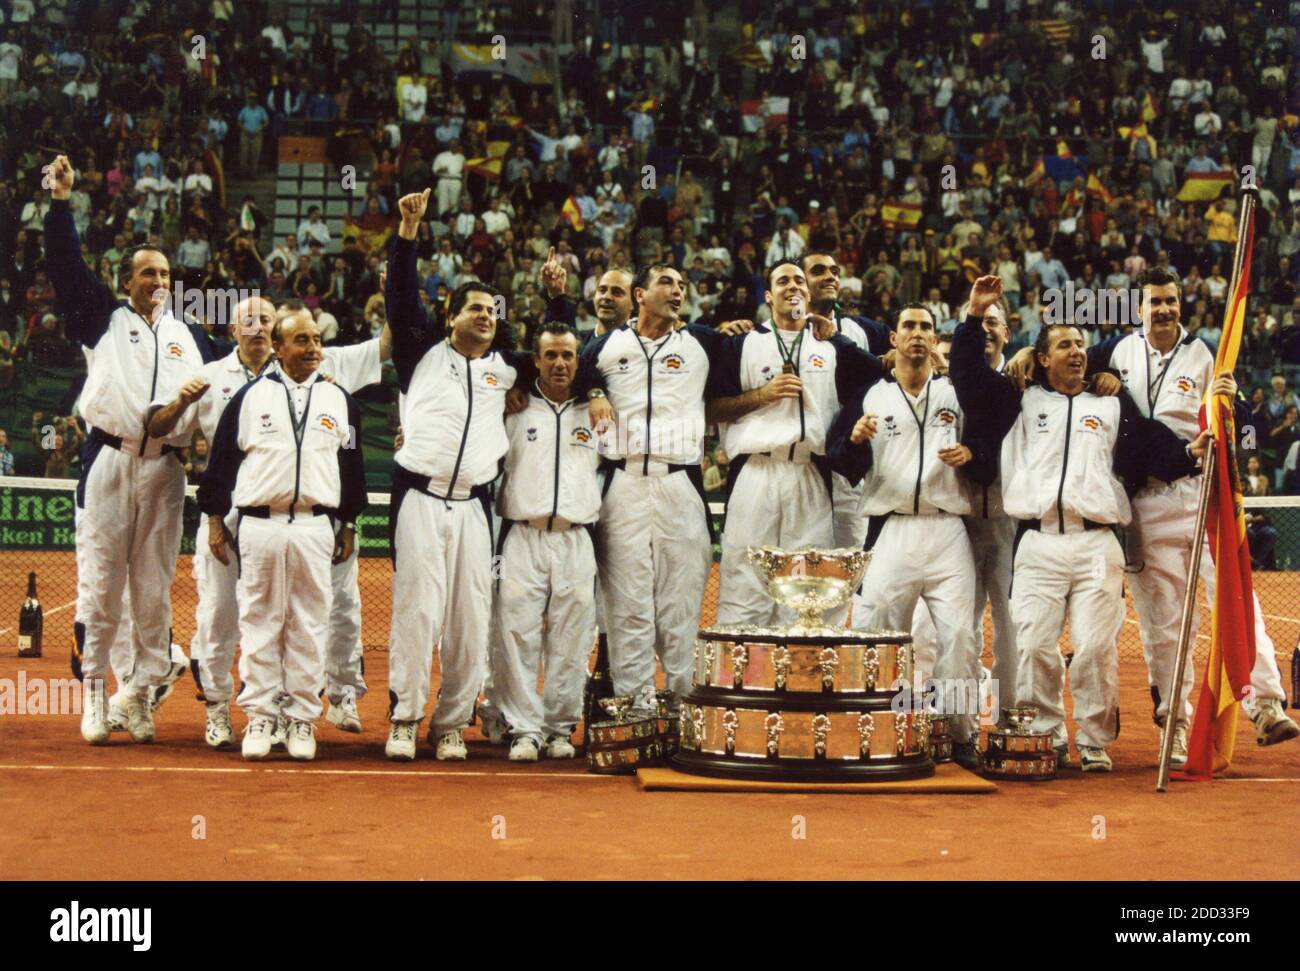 Spanish tennis team wins the Davis Cup, Barcelona, Spain 2000 Stock Photo